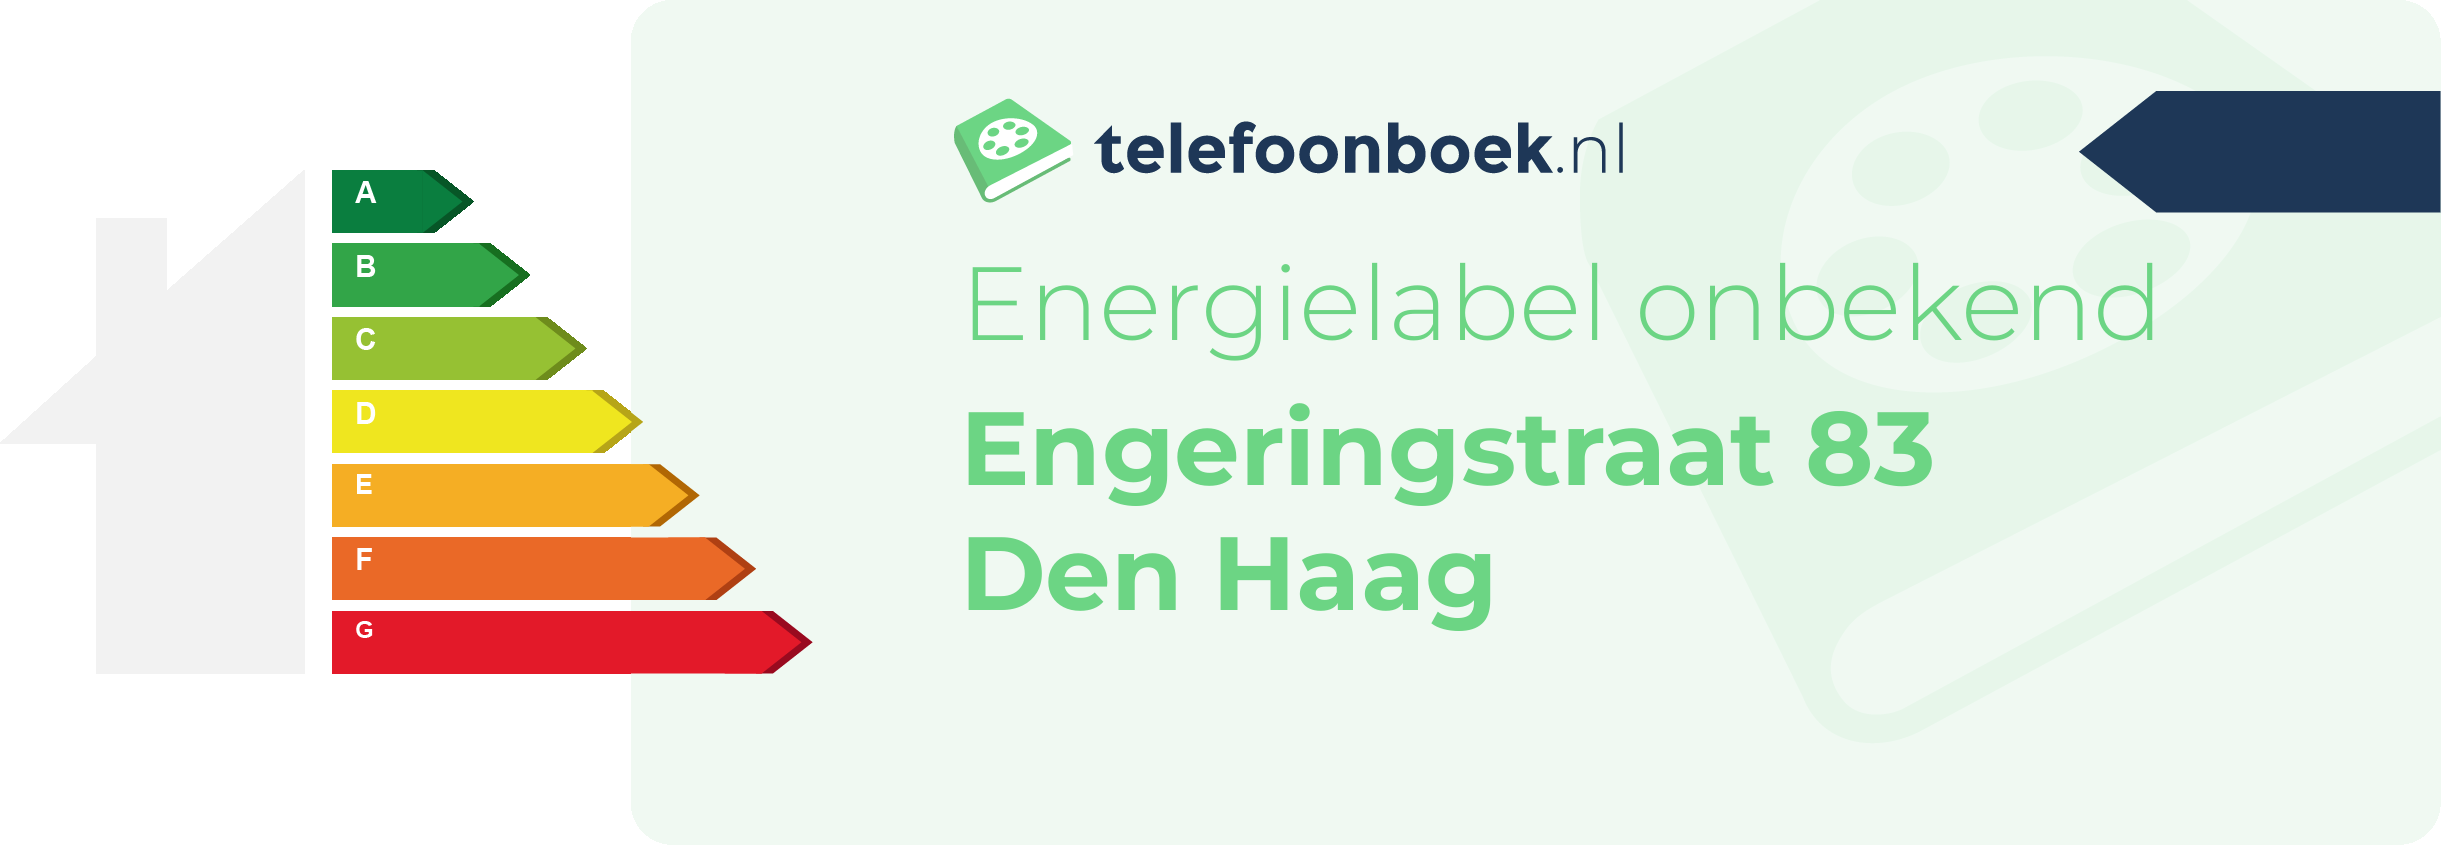 Energielabel Engeringstraat 83 Den Haag